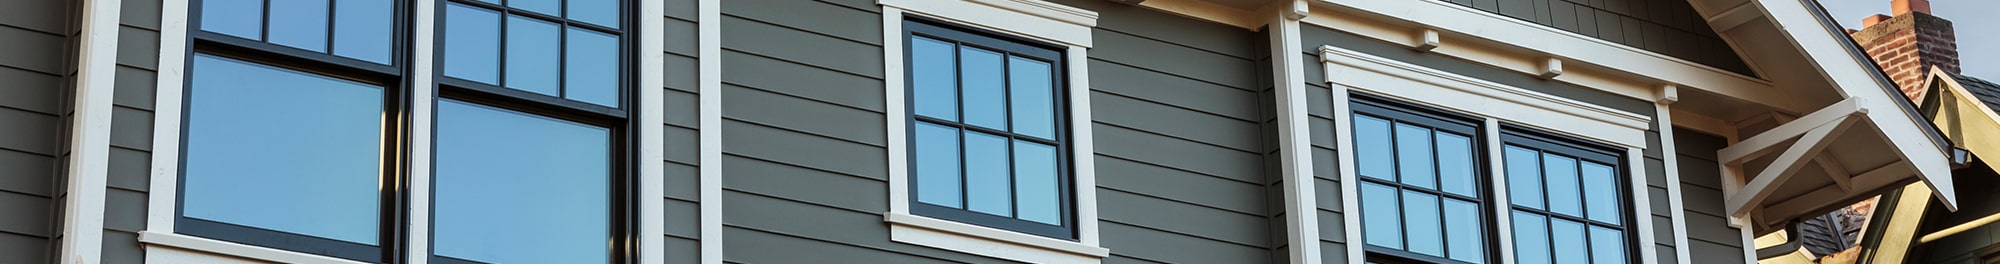 Window replacement & installation company in Racine County - Caledonia, Racine, Mt Pleasant